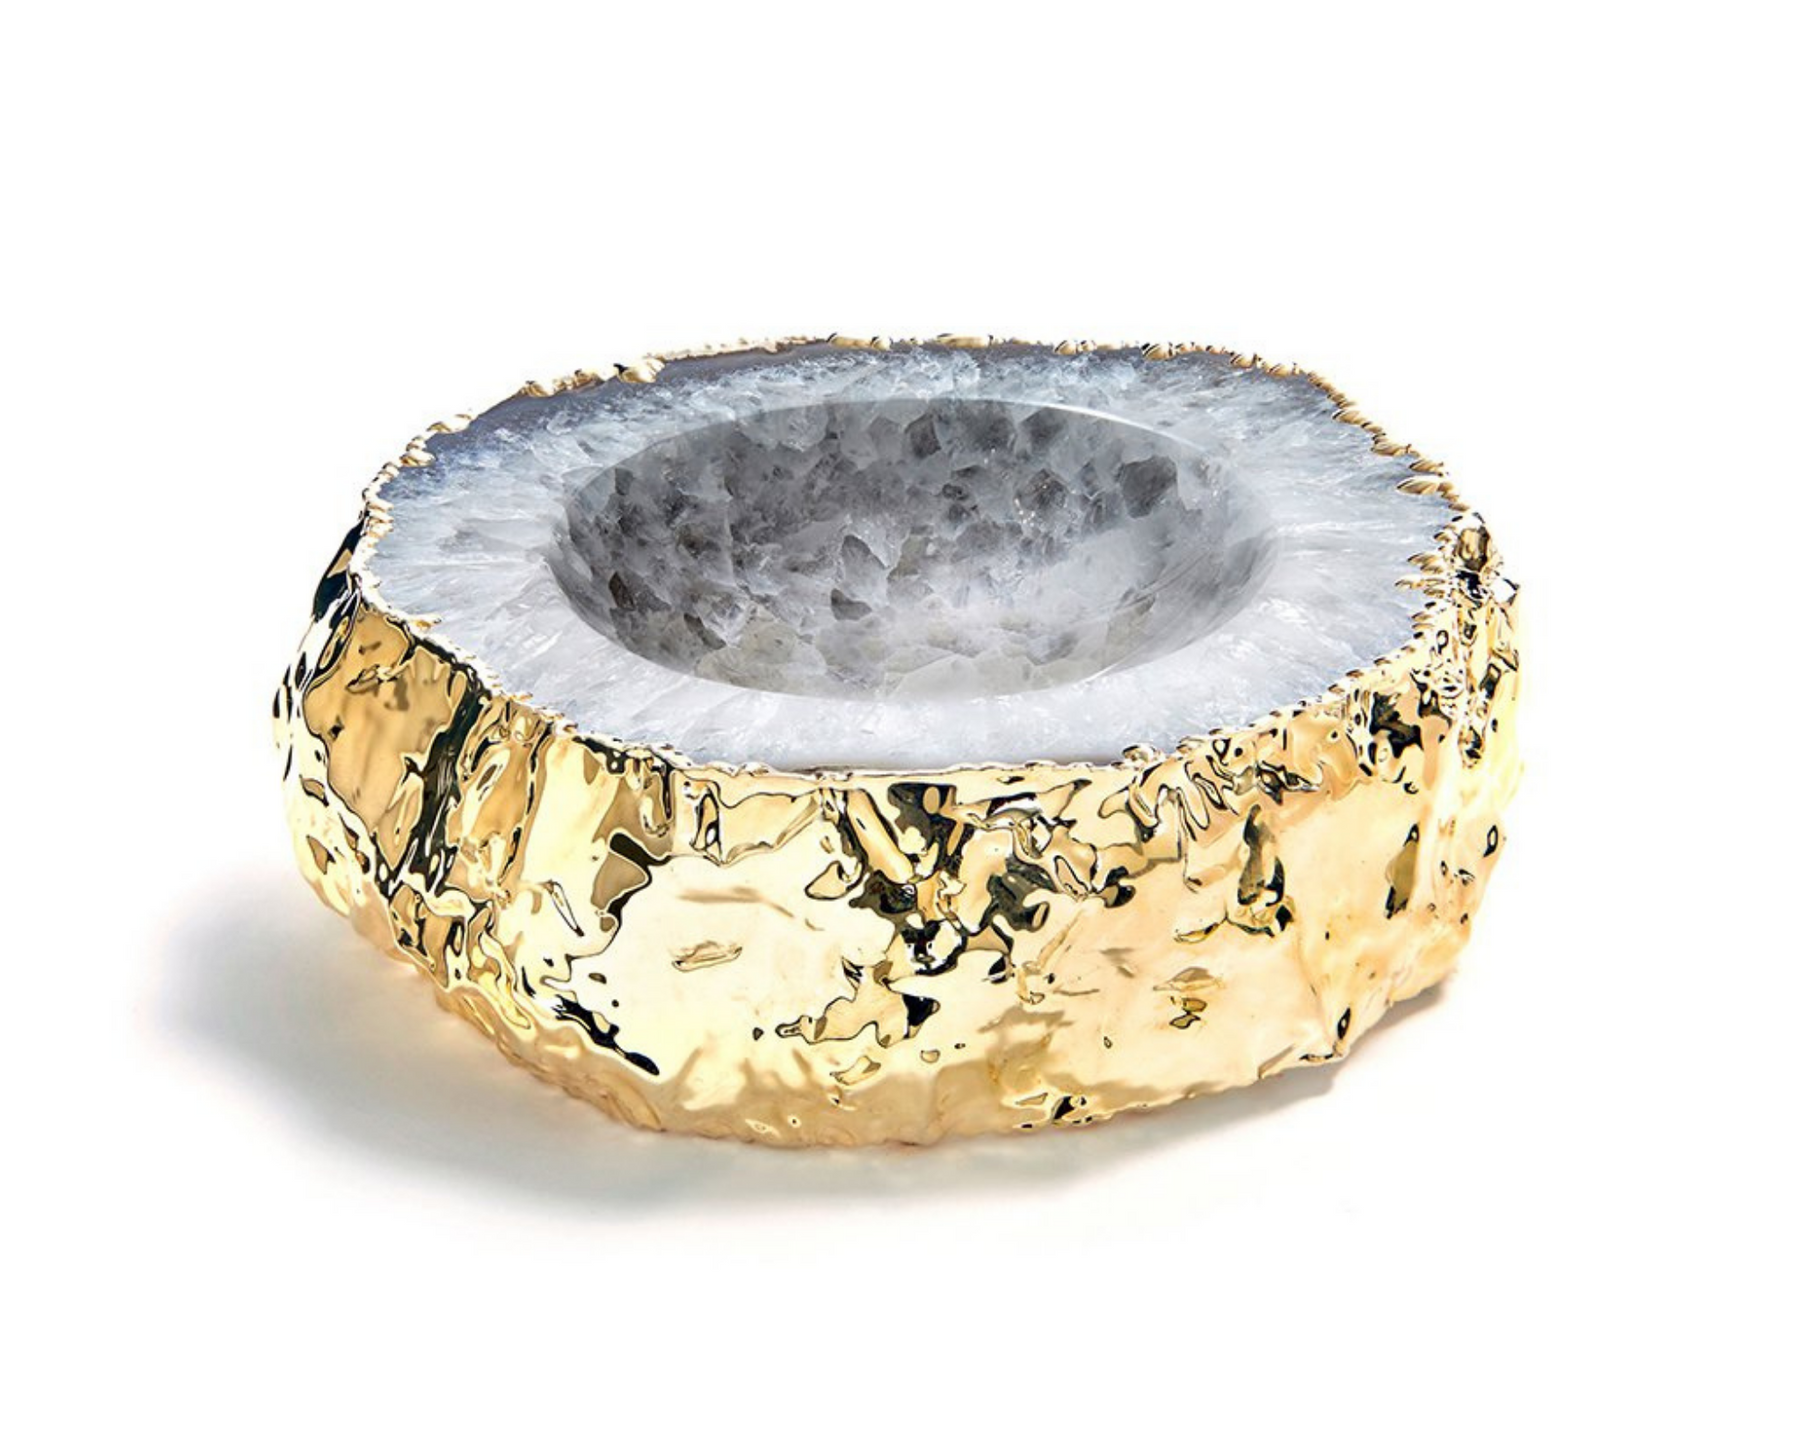 Cascita Bowl - Natural Agate and 24k Gold | DSHOP